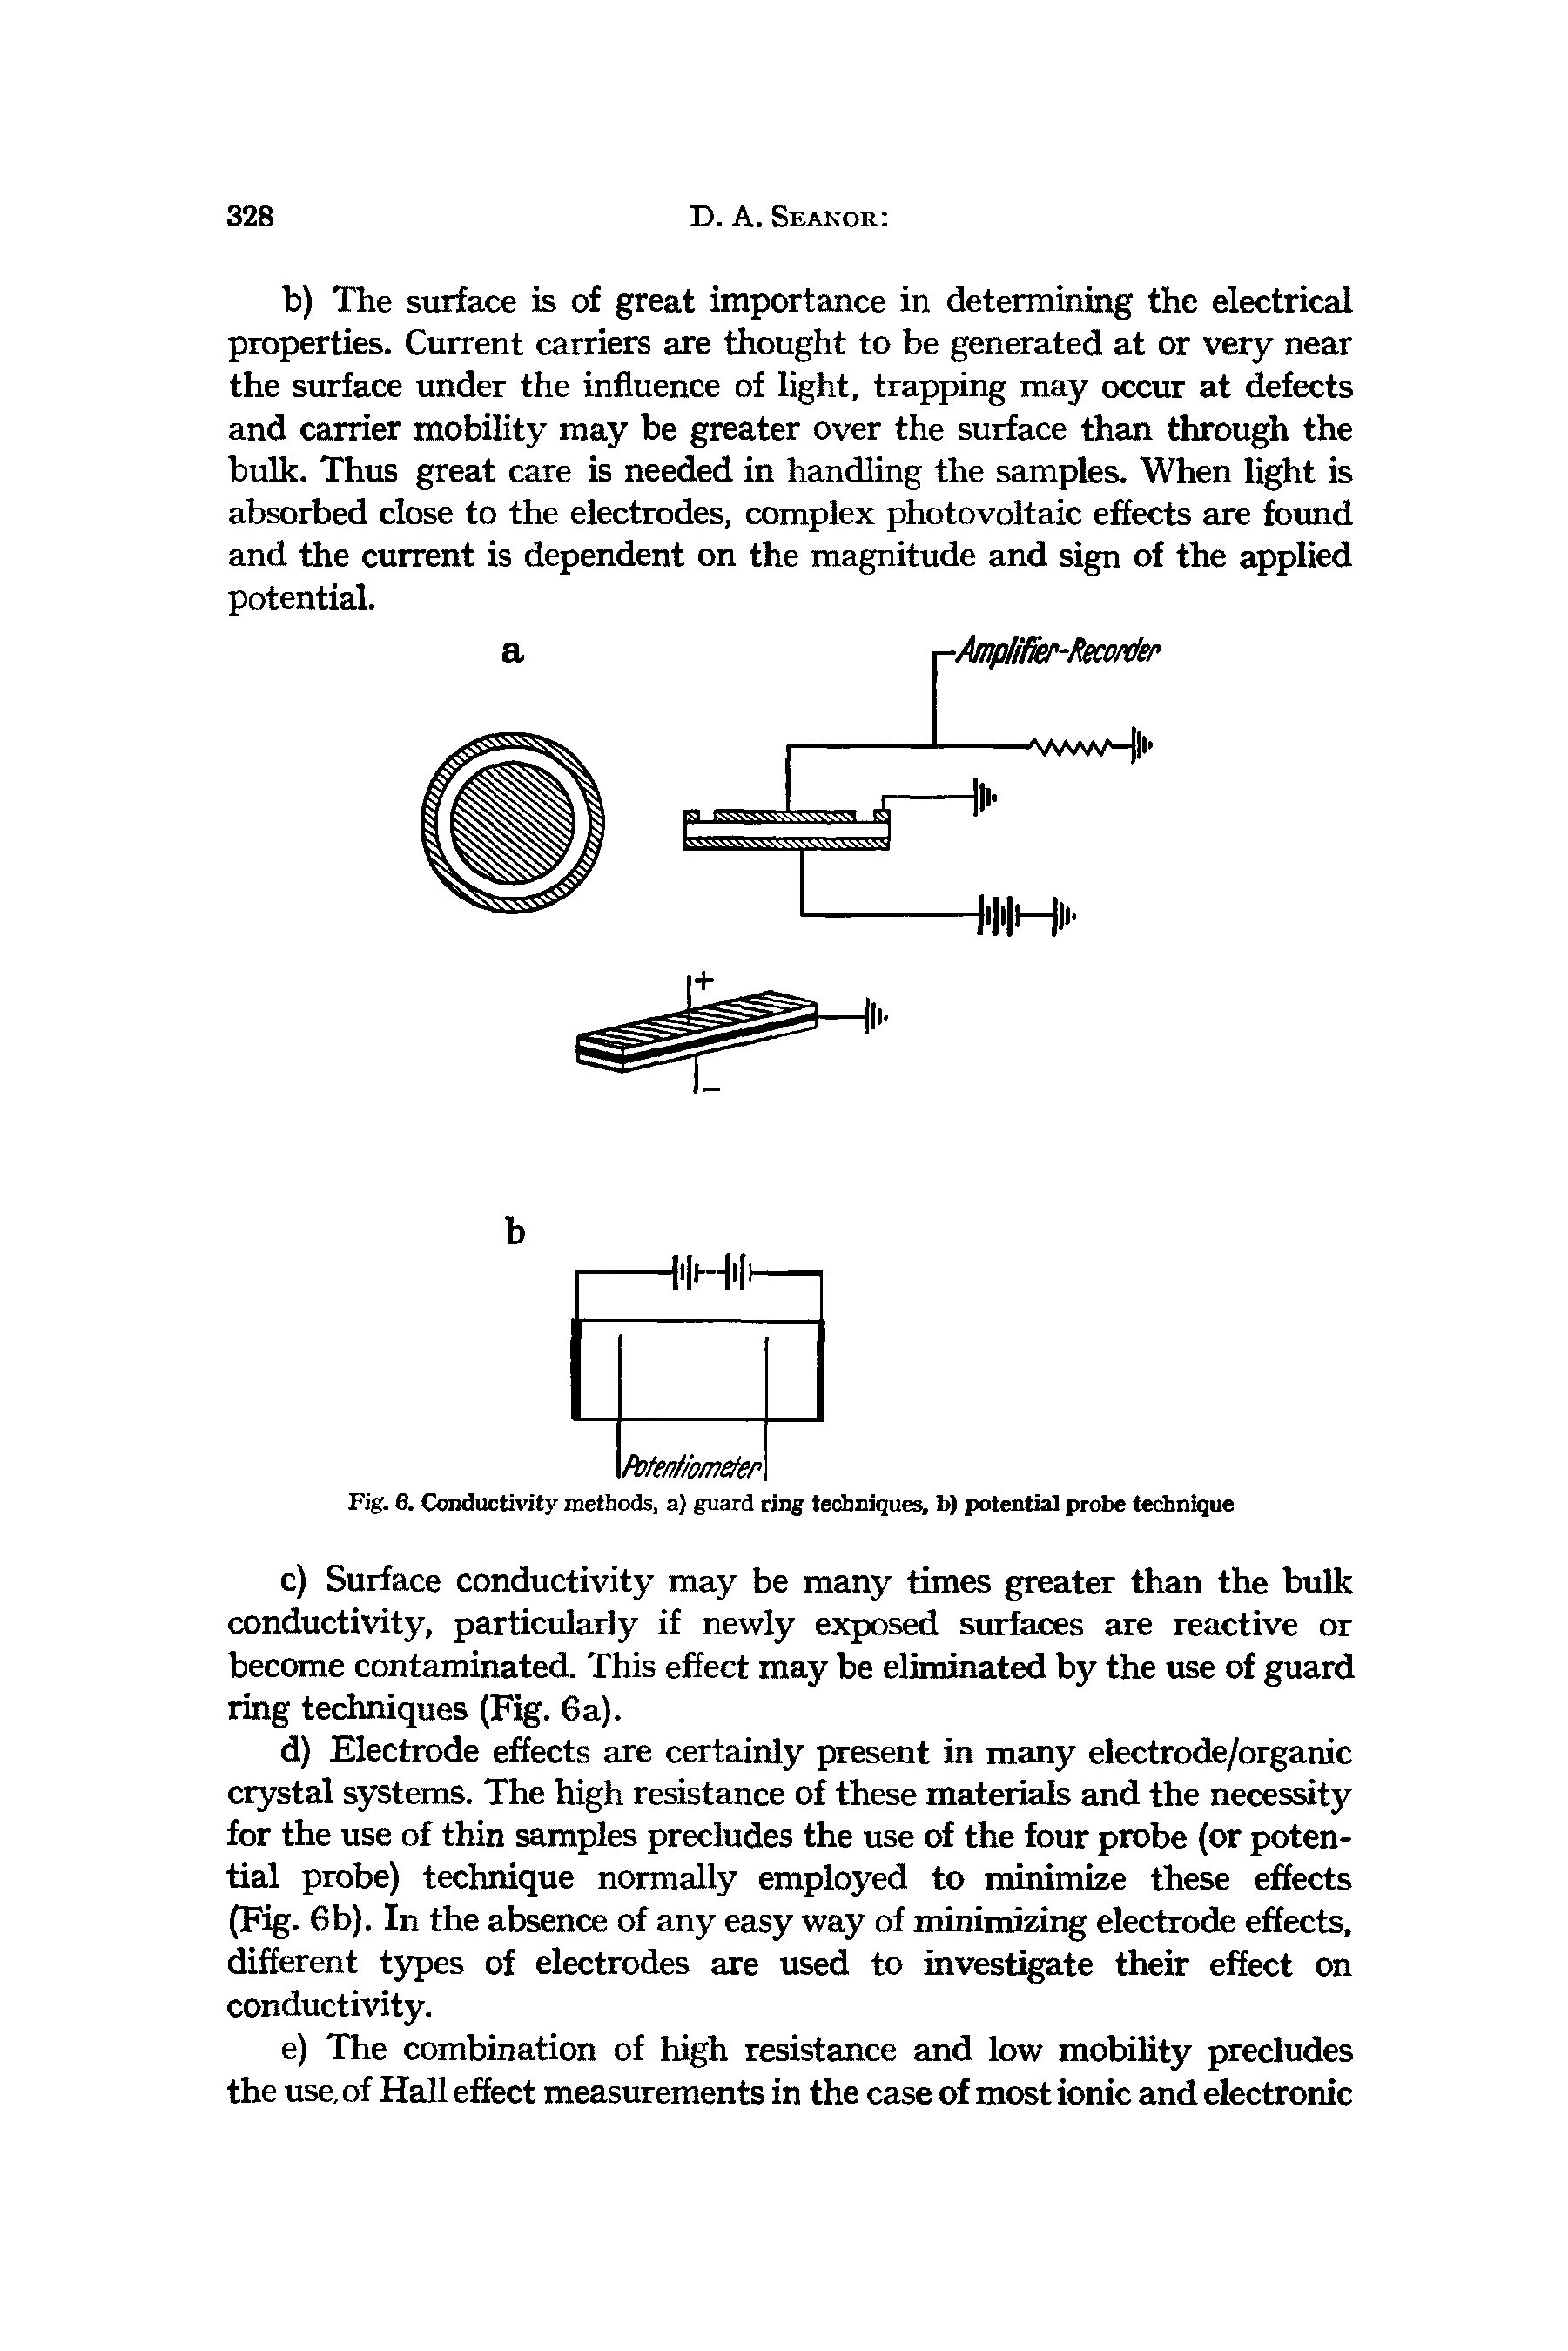 Fig. 6. Conductivity methods, a) guard ring techniques, b) potential probe technique...